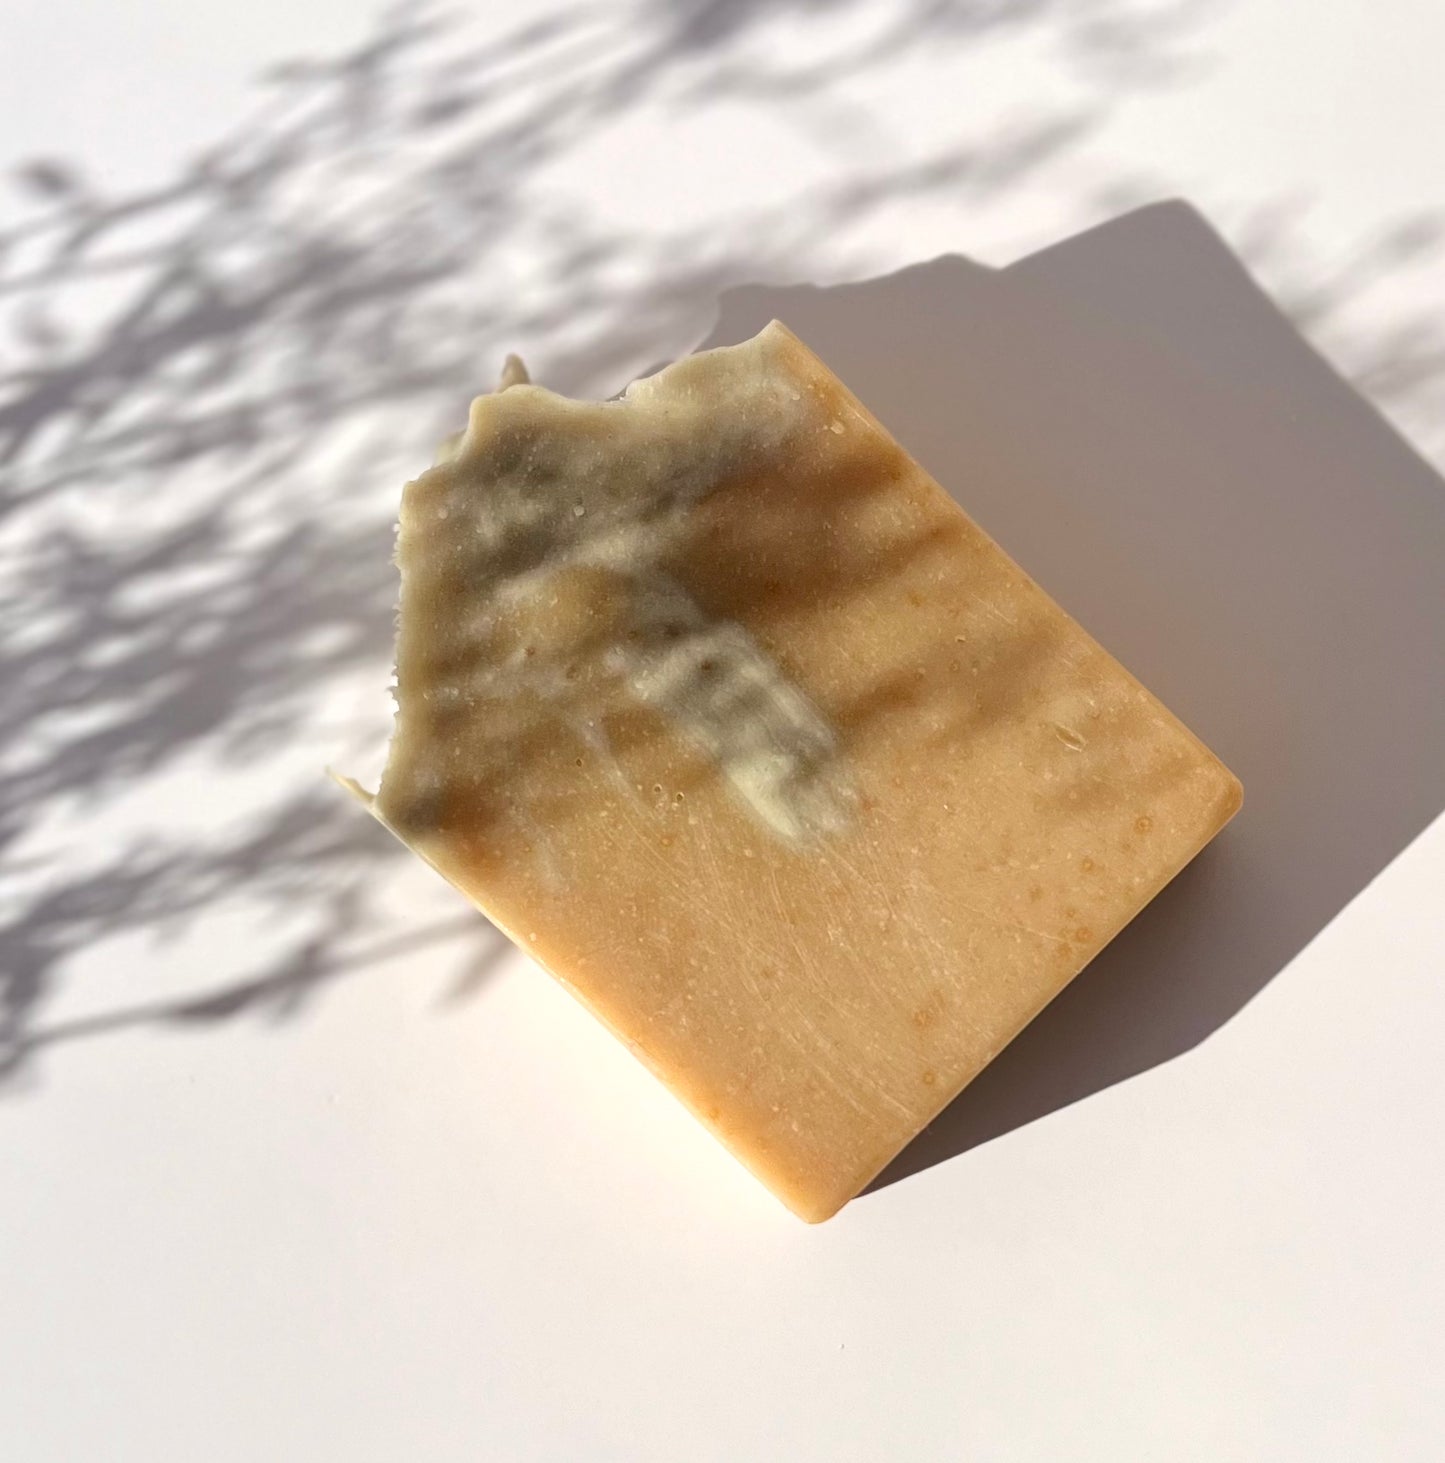 A bar soap - Bay Rum Soap